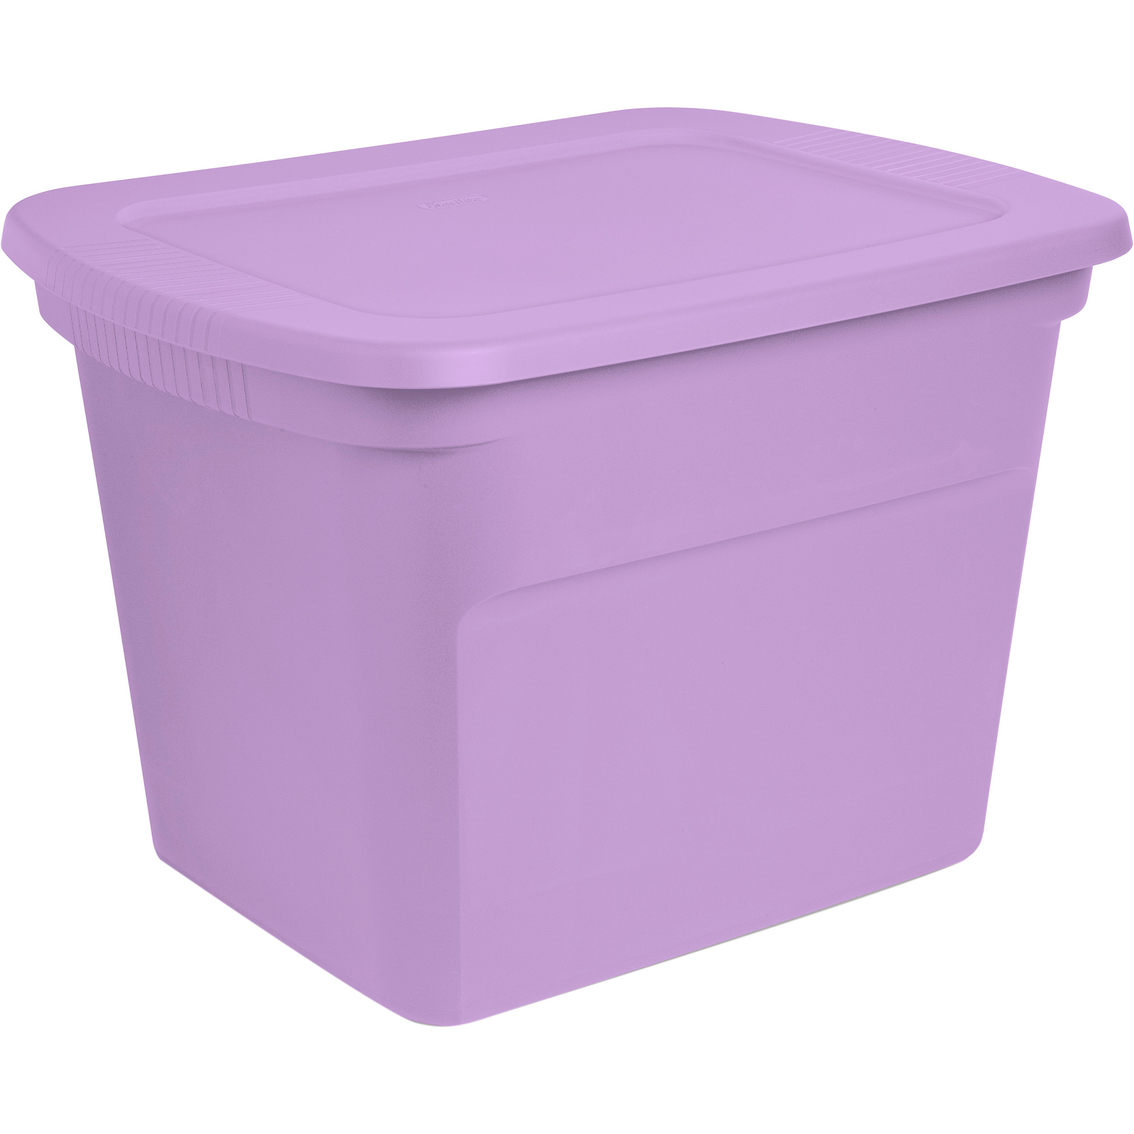 Sterilite 18 Gallon Tote Lilac Pixie, Plastic Bins & Drawers, Household